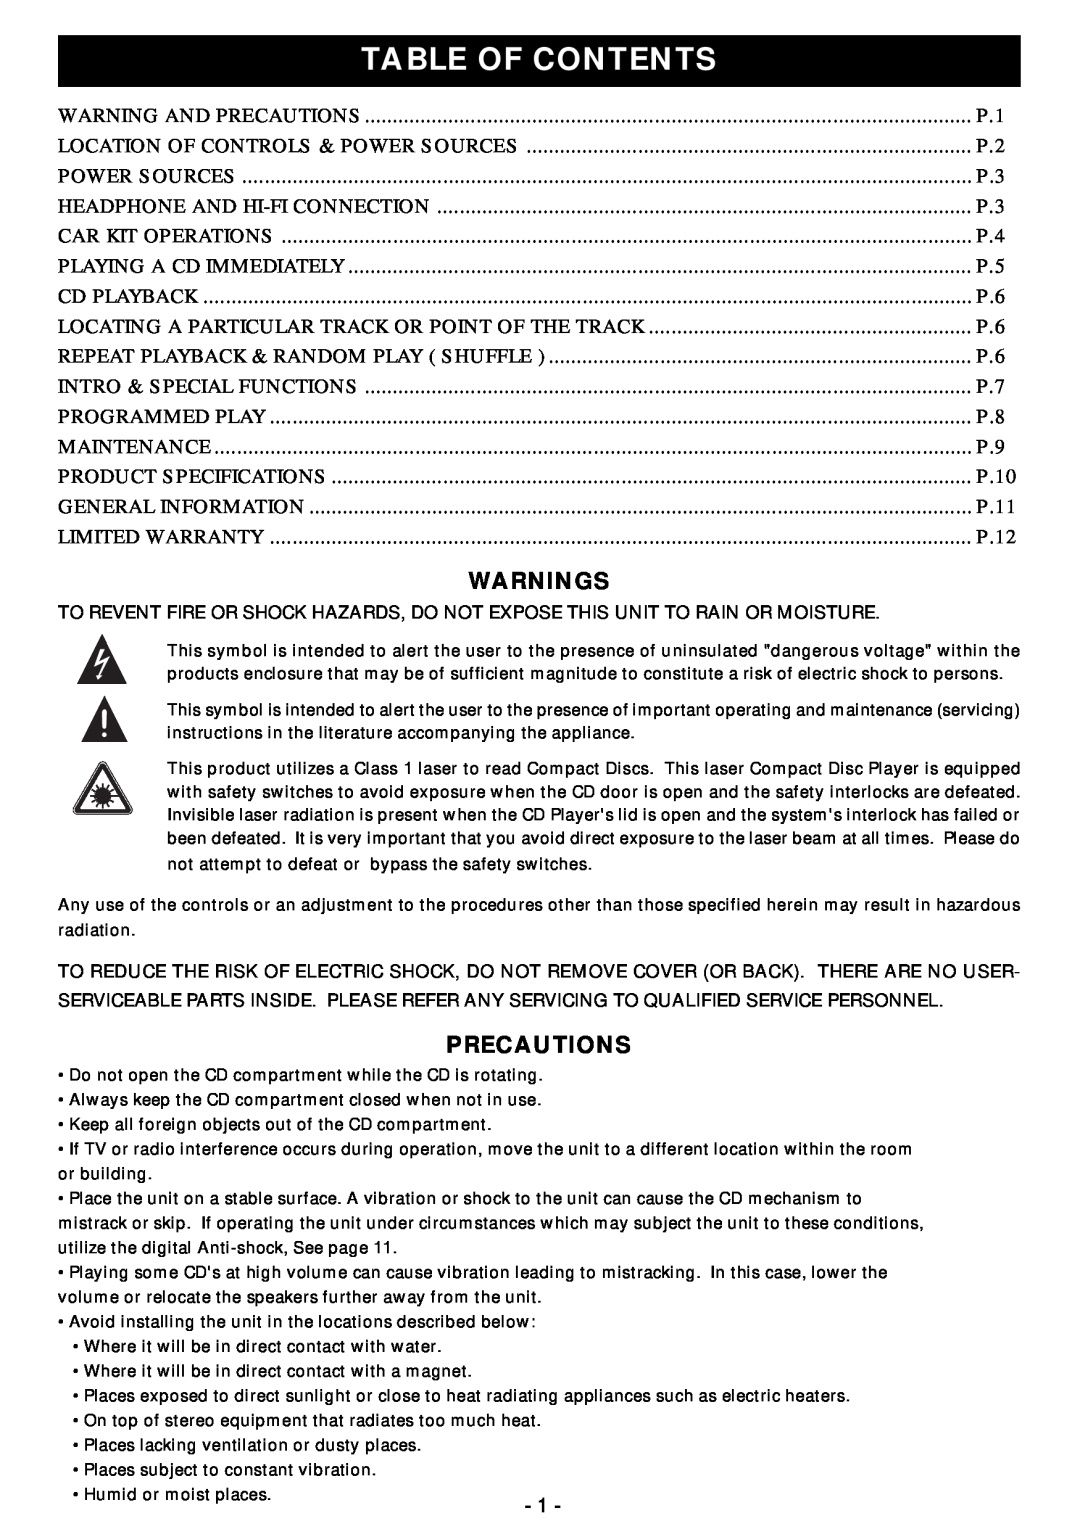 Memorex MD6440cp manual Table Of Contents, Warnings, Precautions, P.10, P.11, P.12 